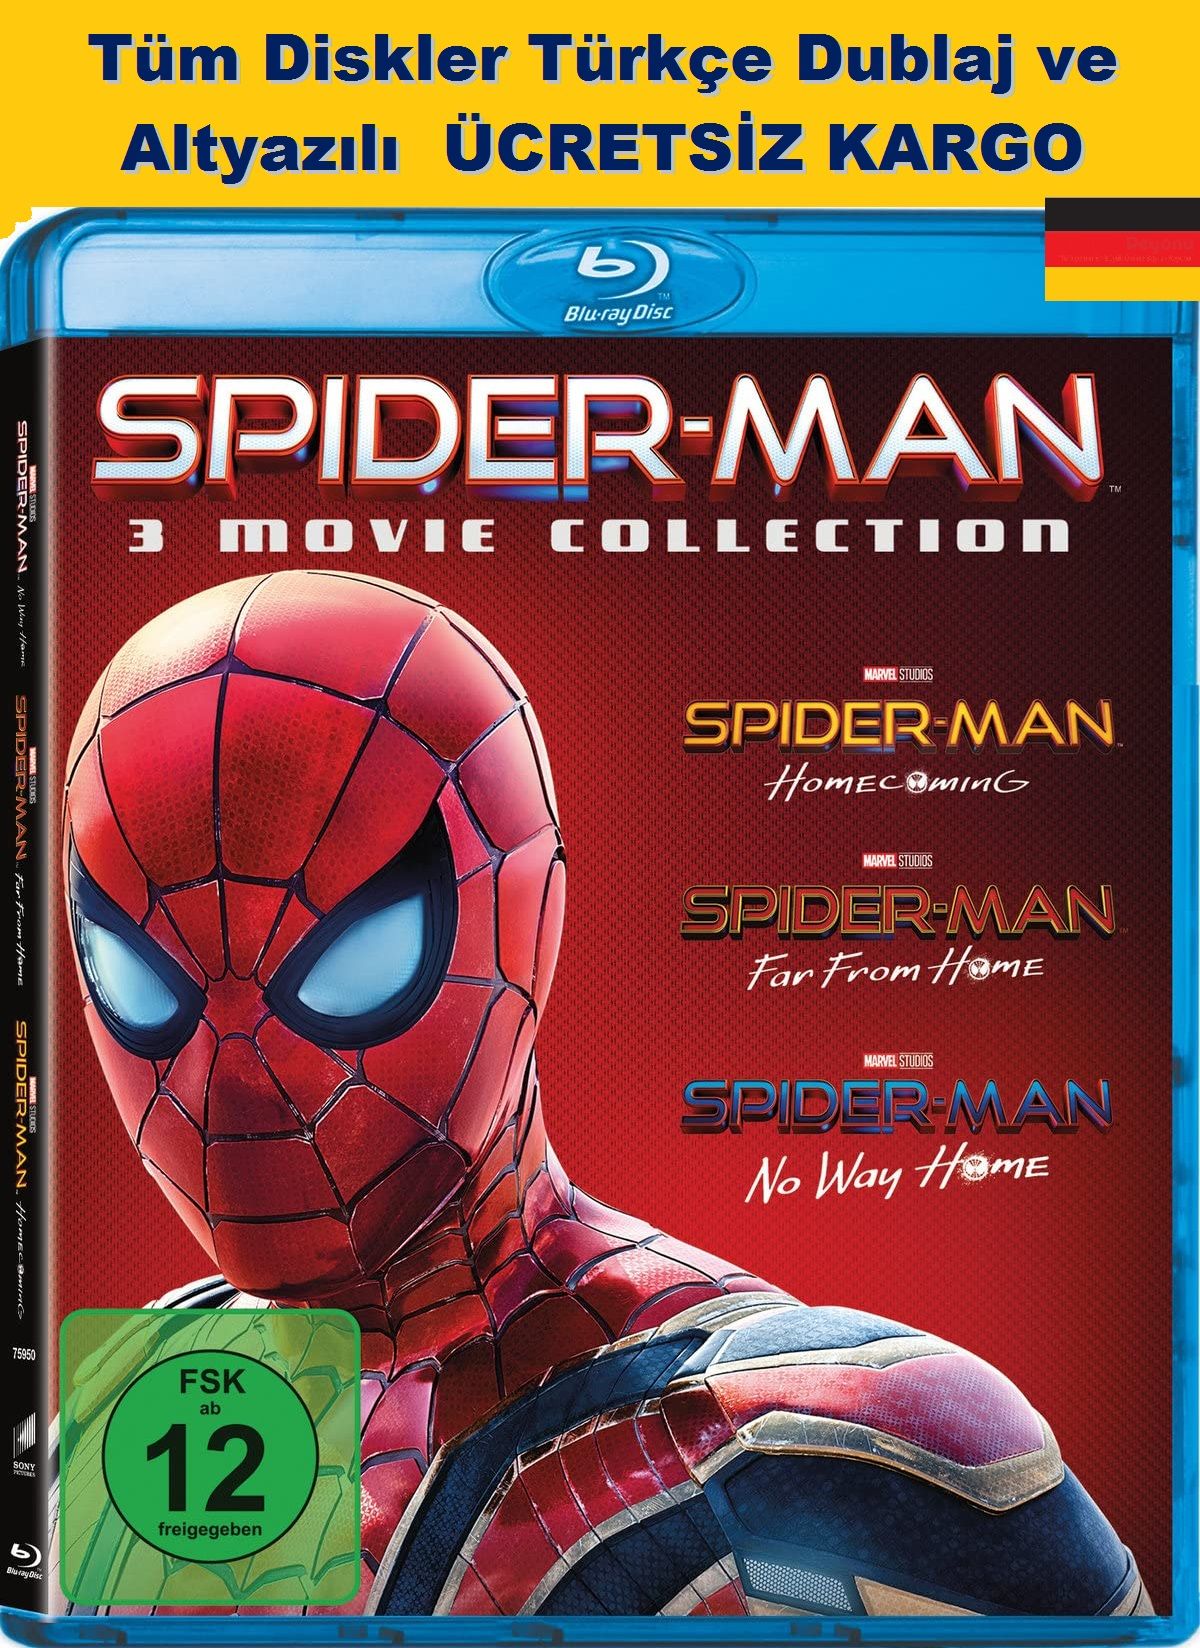 Spider-Man 3 Movie Collection Blu-Ray 3 Disk